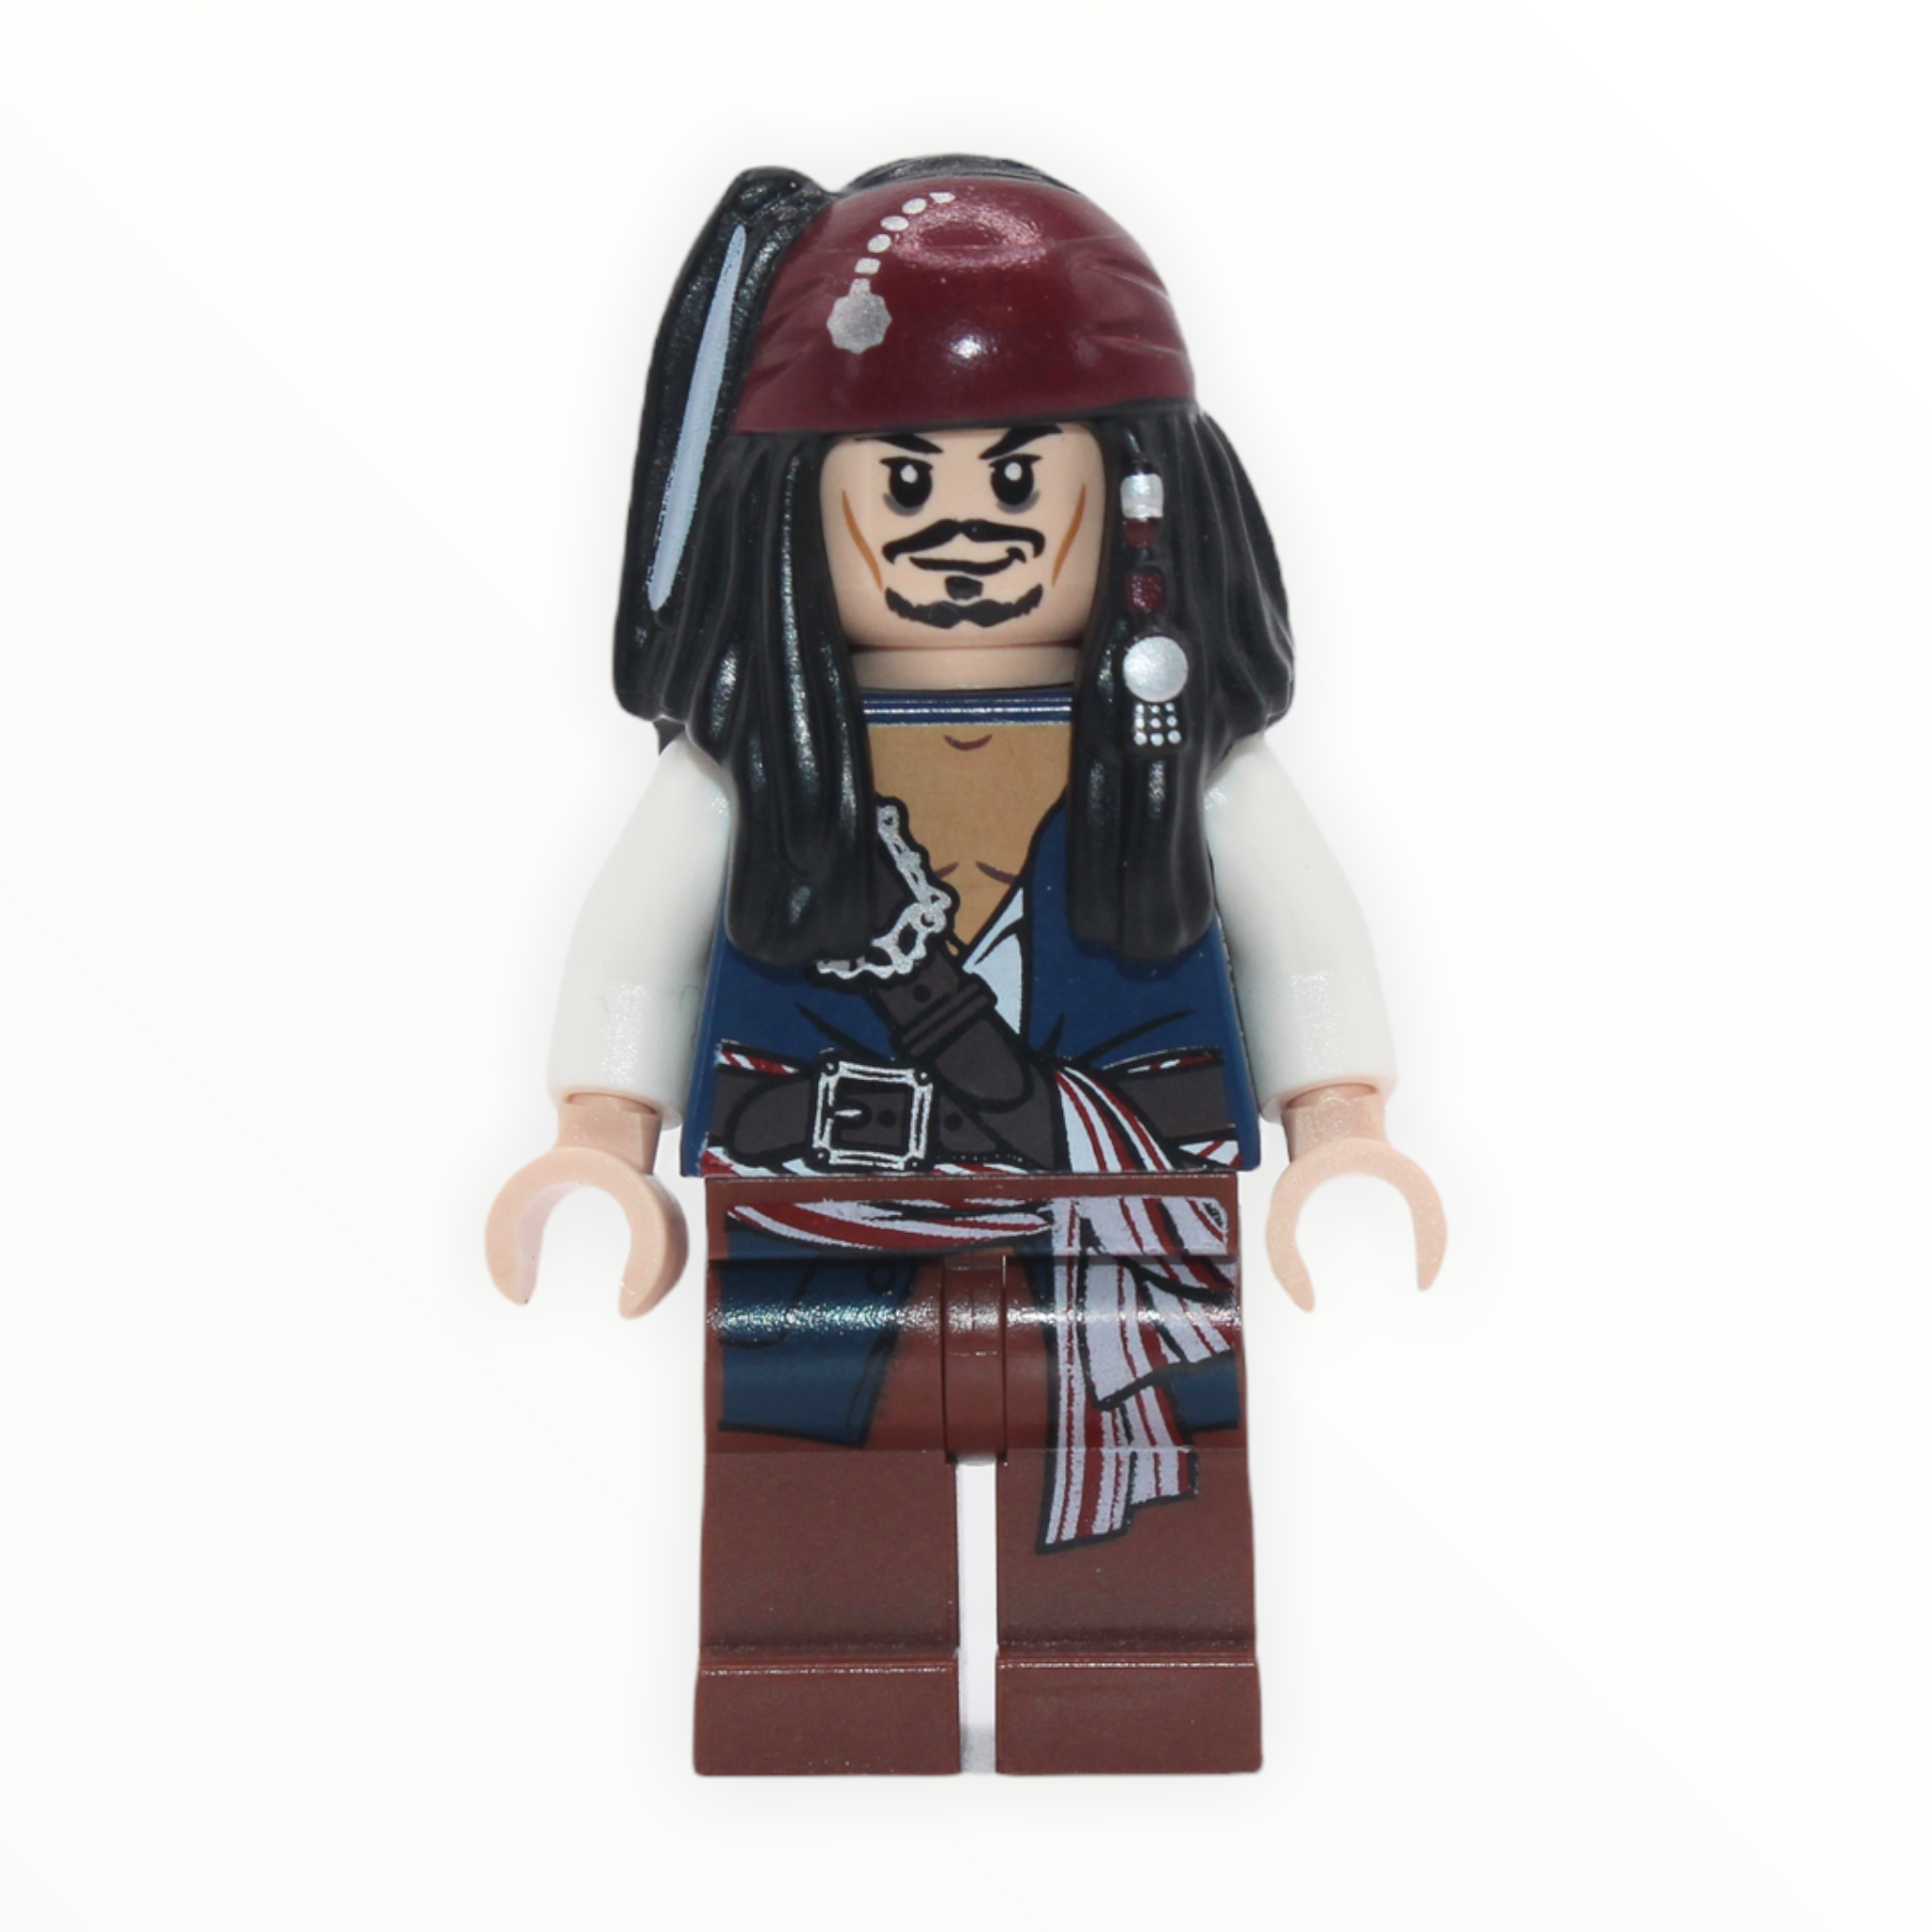 Captain Jack Sparrow (smile / scared)